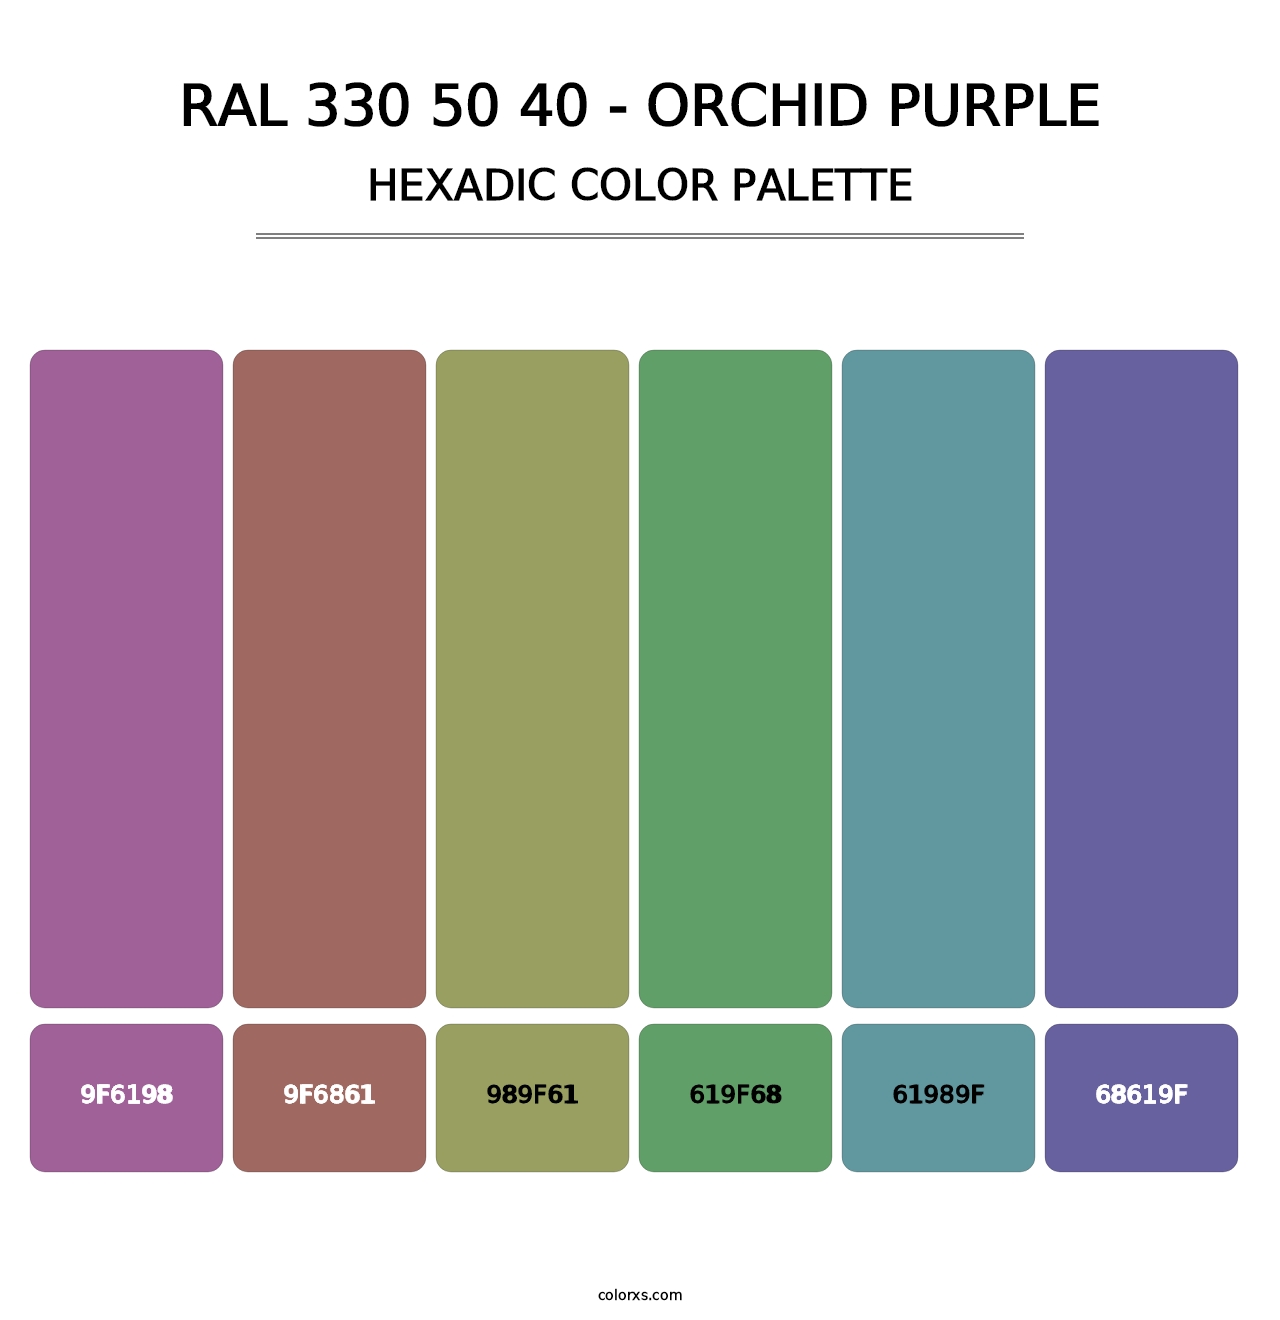 RAL 330 50 40 - Orchid Purple - Hexadic Color Palette